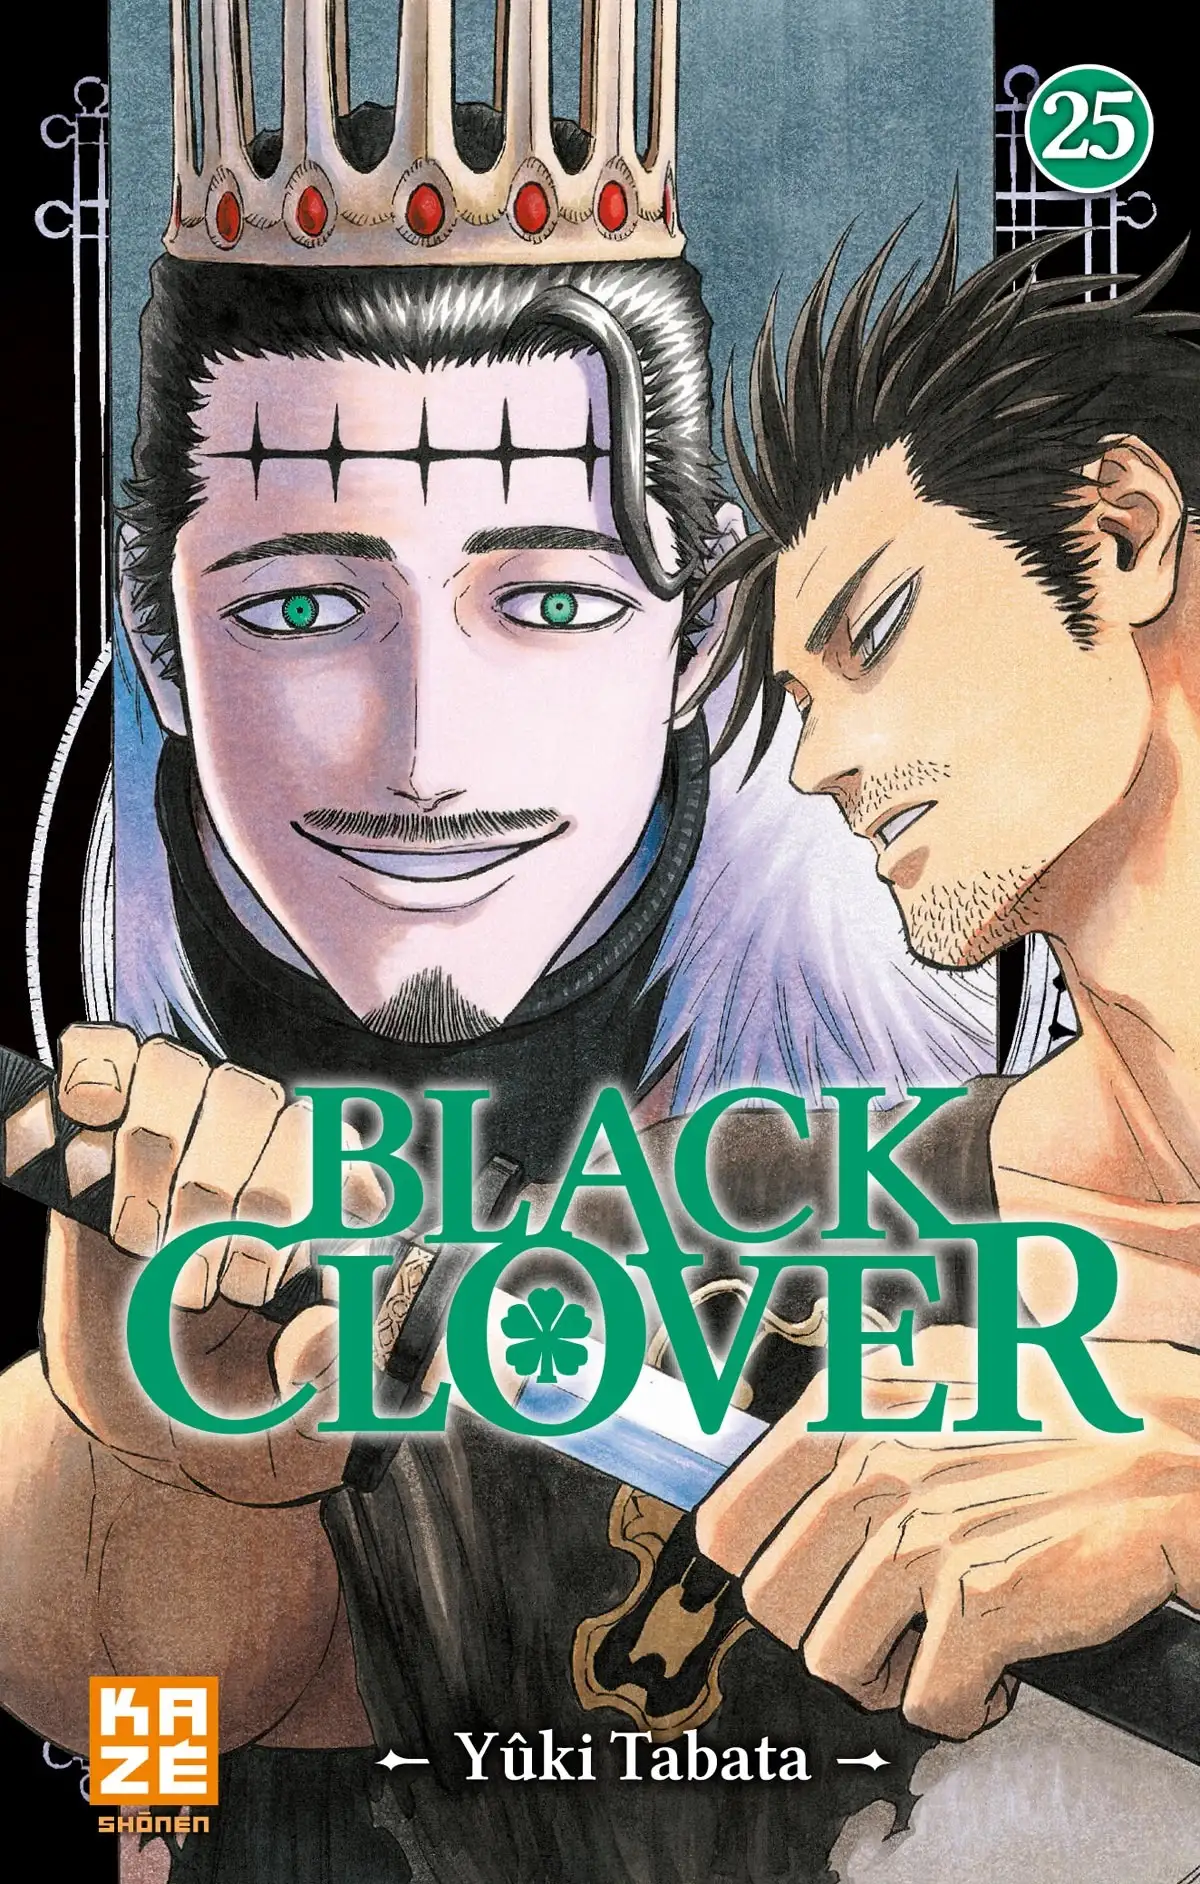 Black Clover Volume 25 page 1